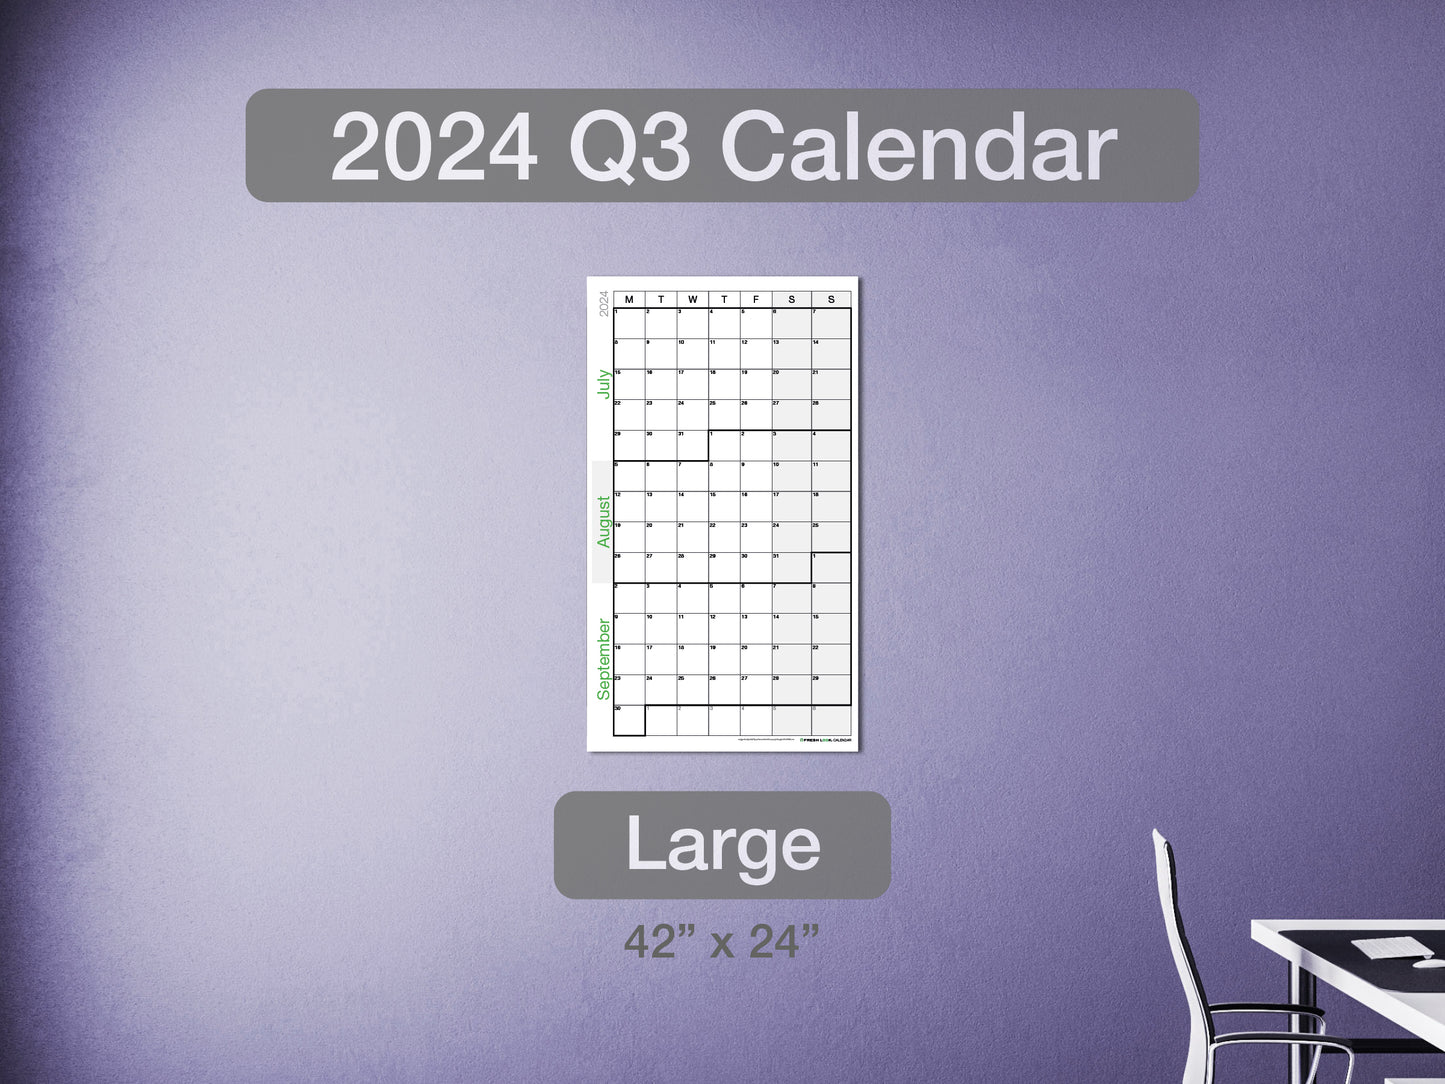 2024 Q3 Calendar Large